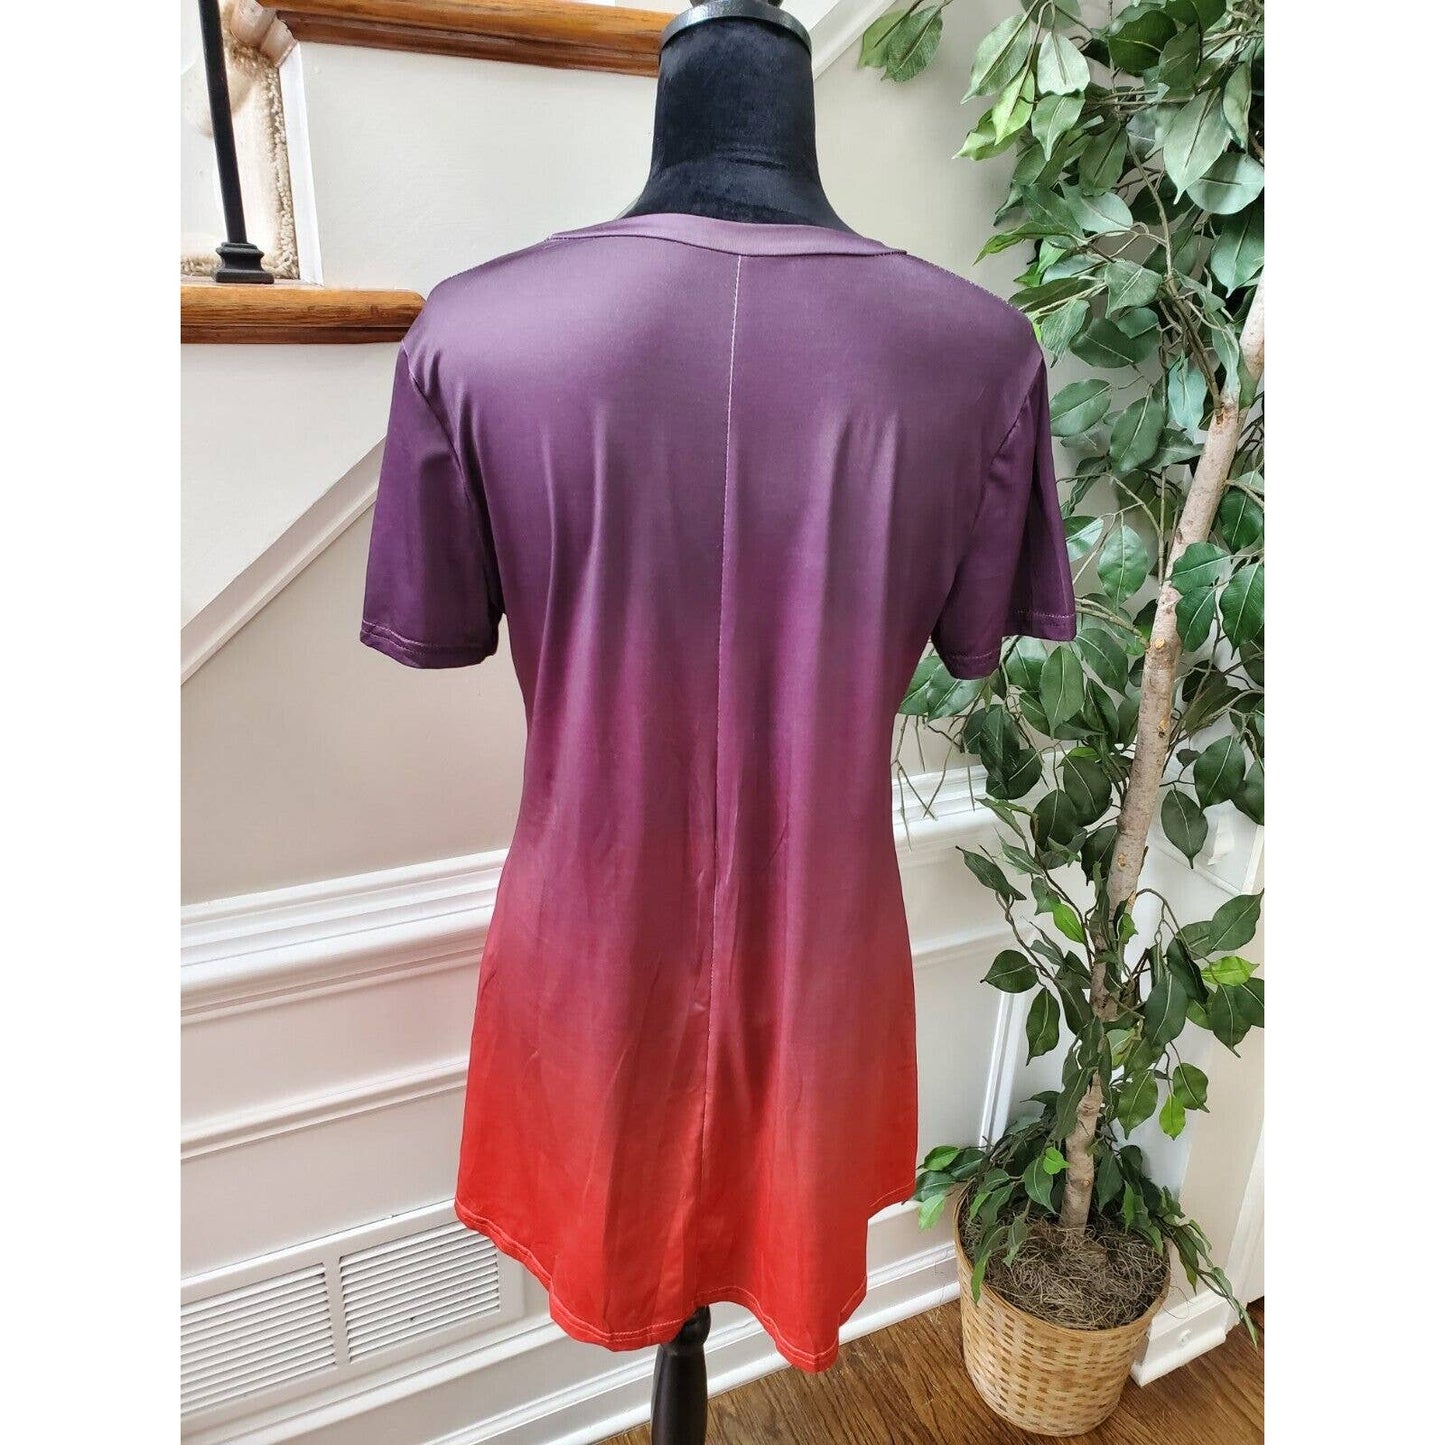 SHEIN Women's Purple Polyester Crew Neck Short Sleeve Tunic Top Shirt M